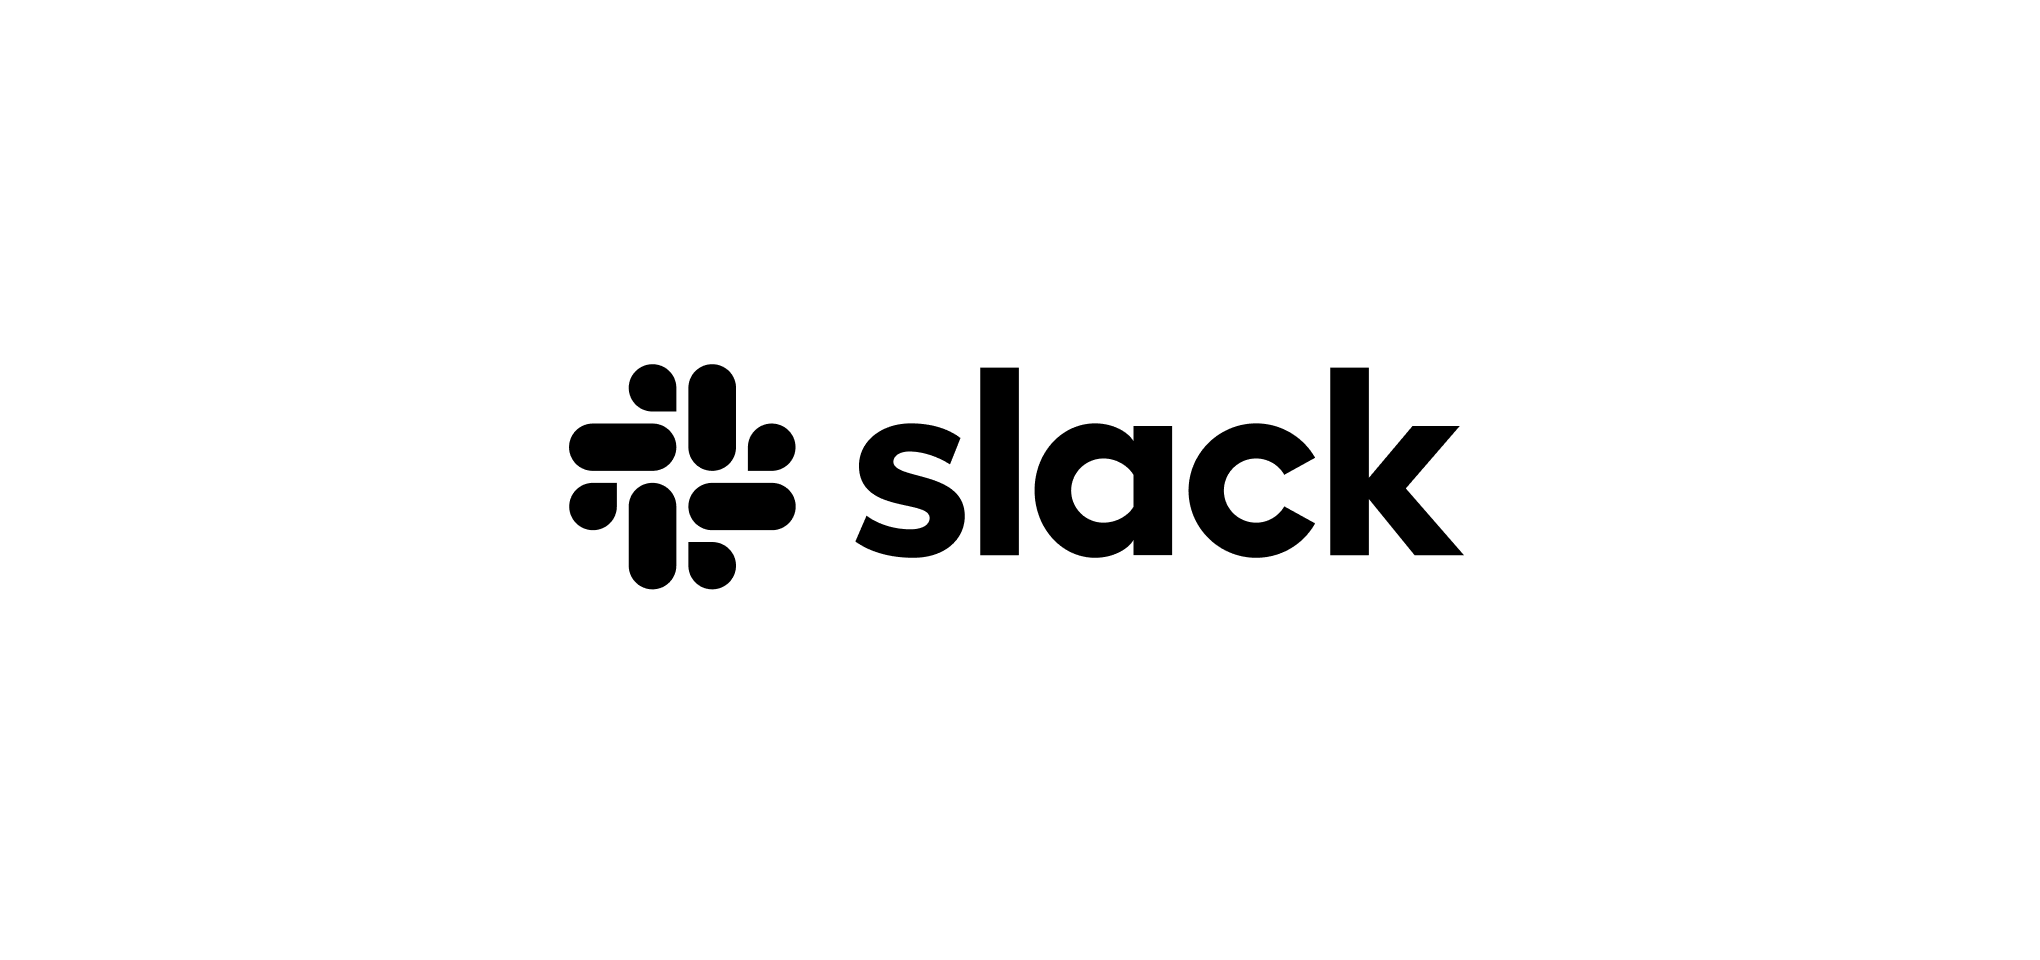 The Slack logo